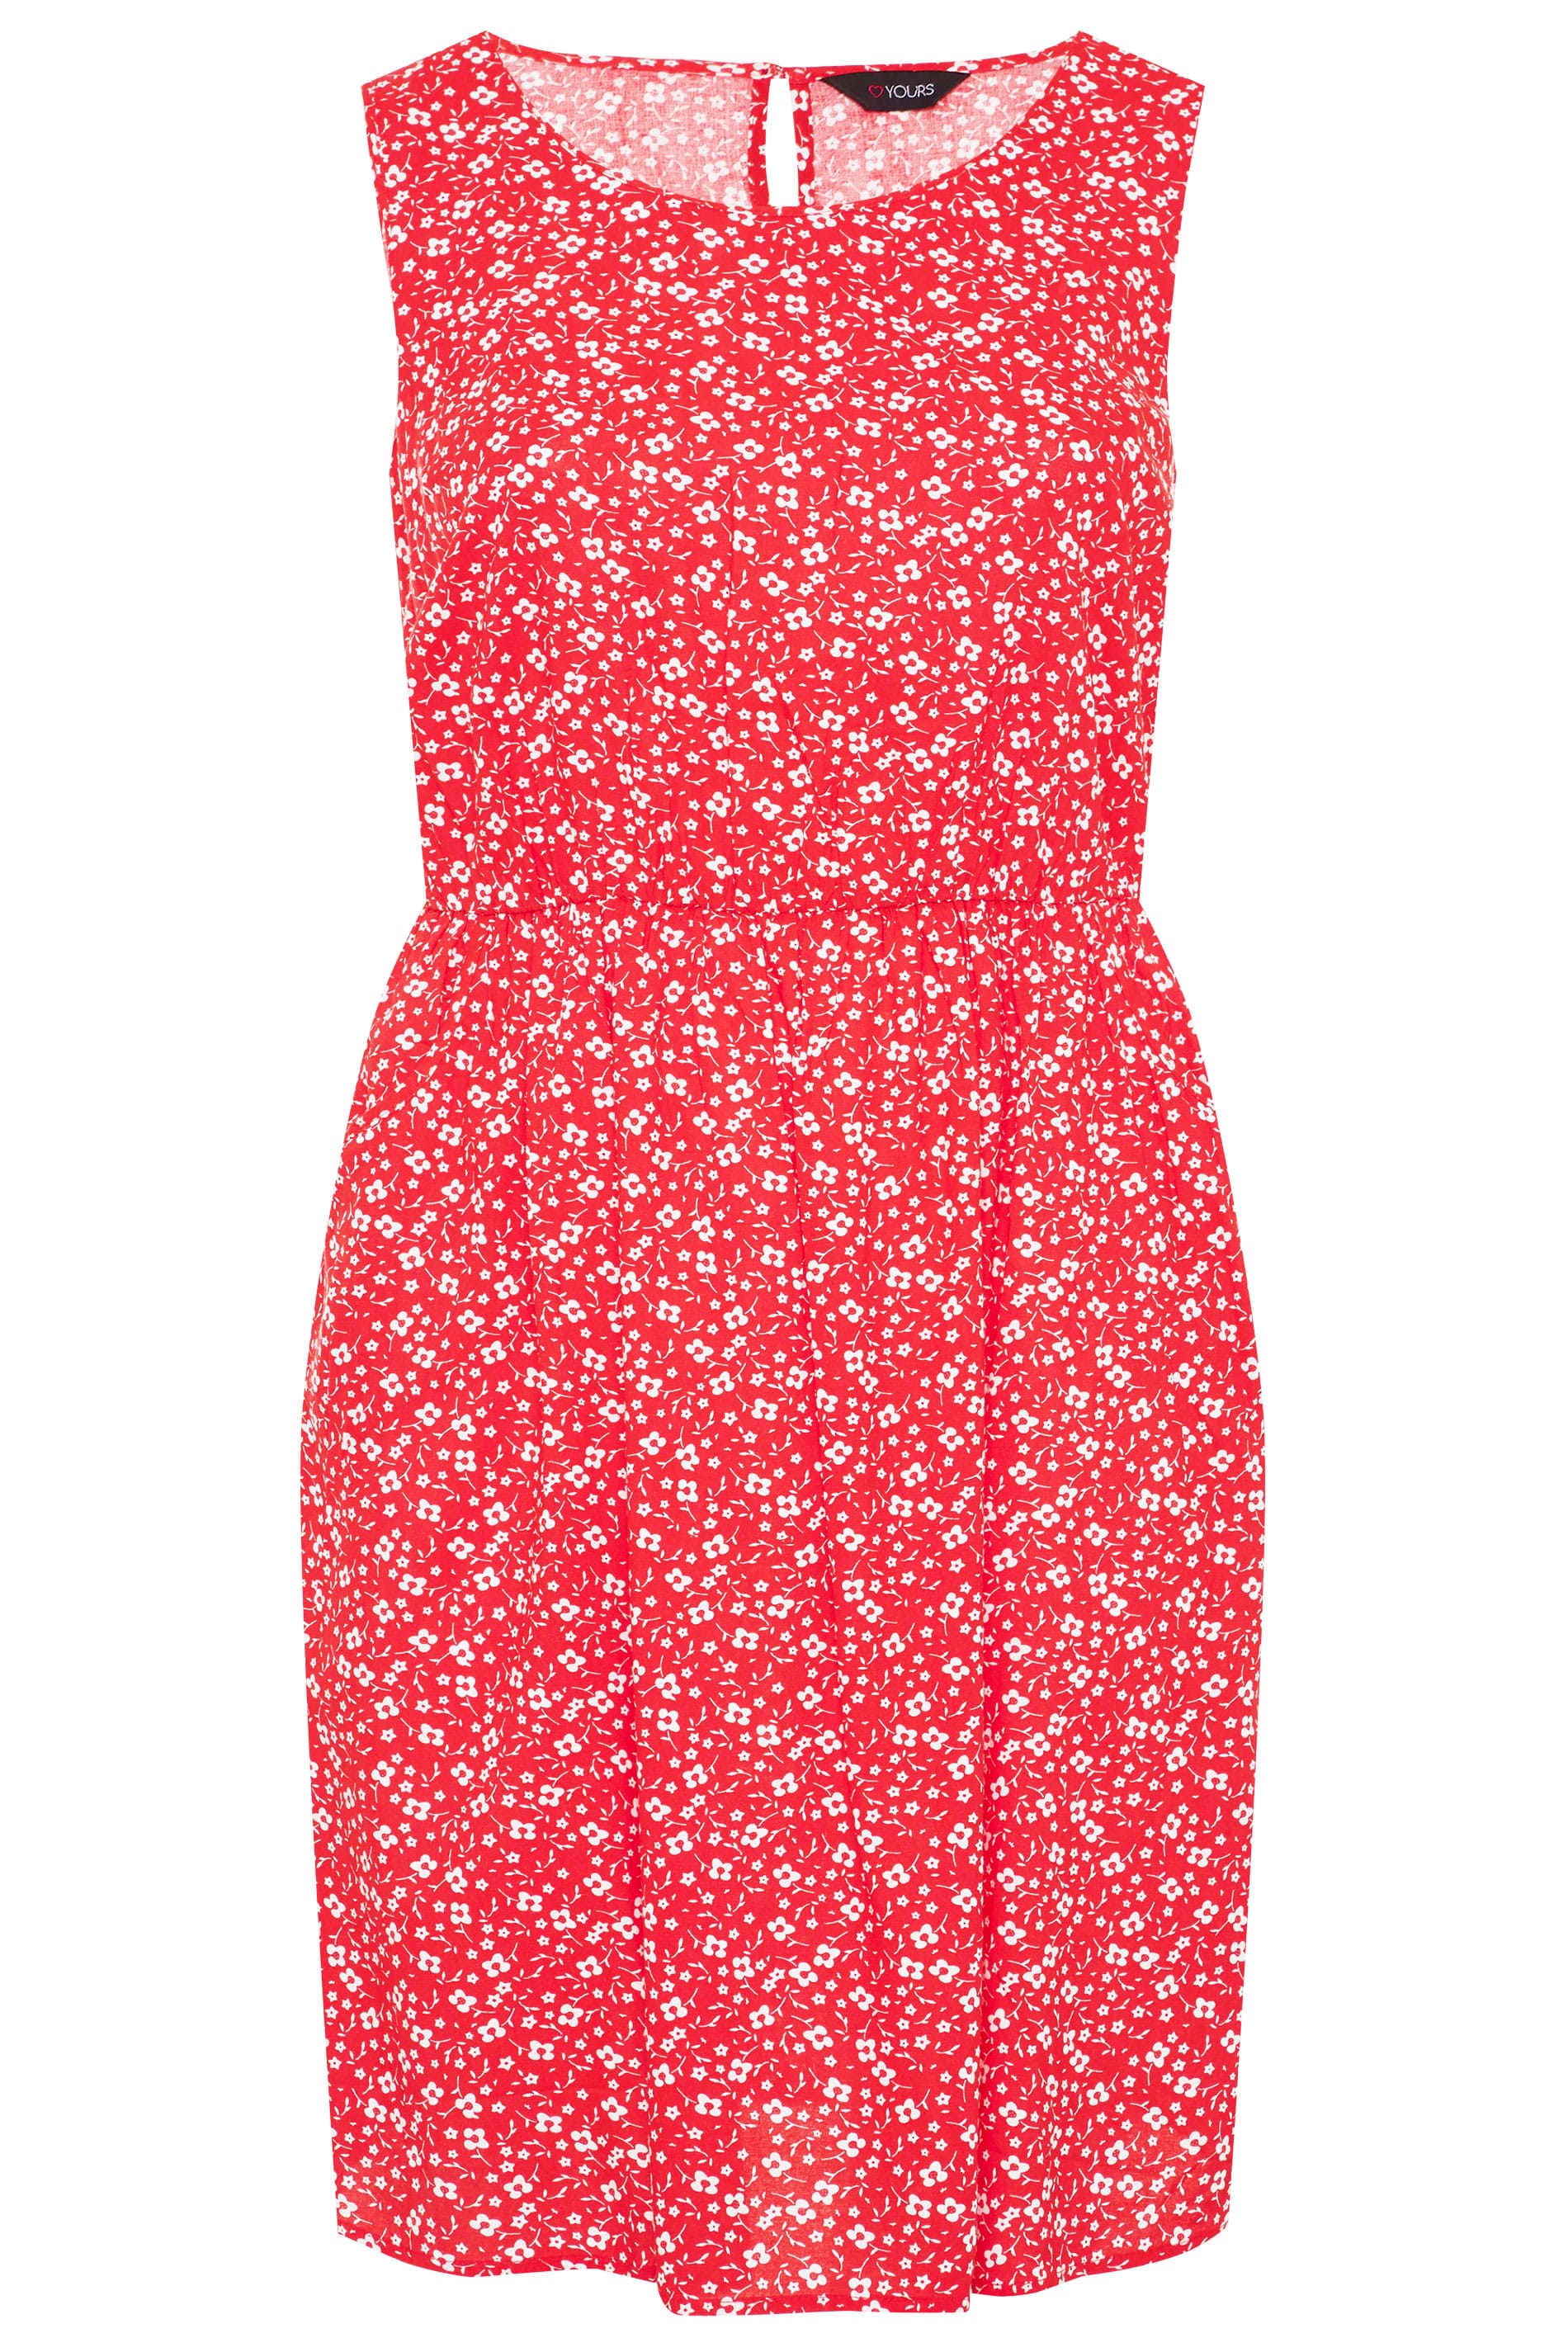 Red Ditsy Floral Pocket Skater Dress | Yours Clothing